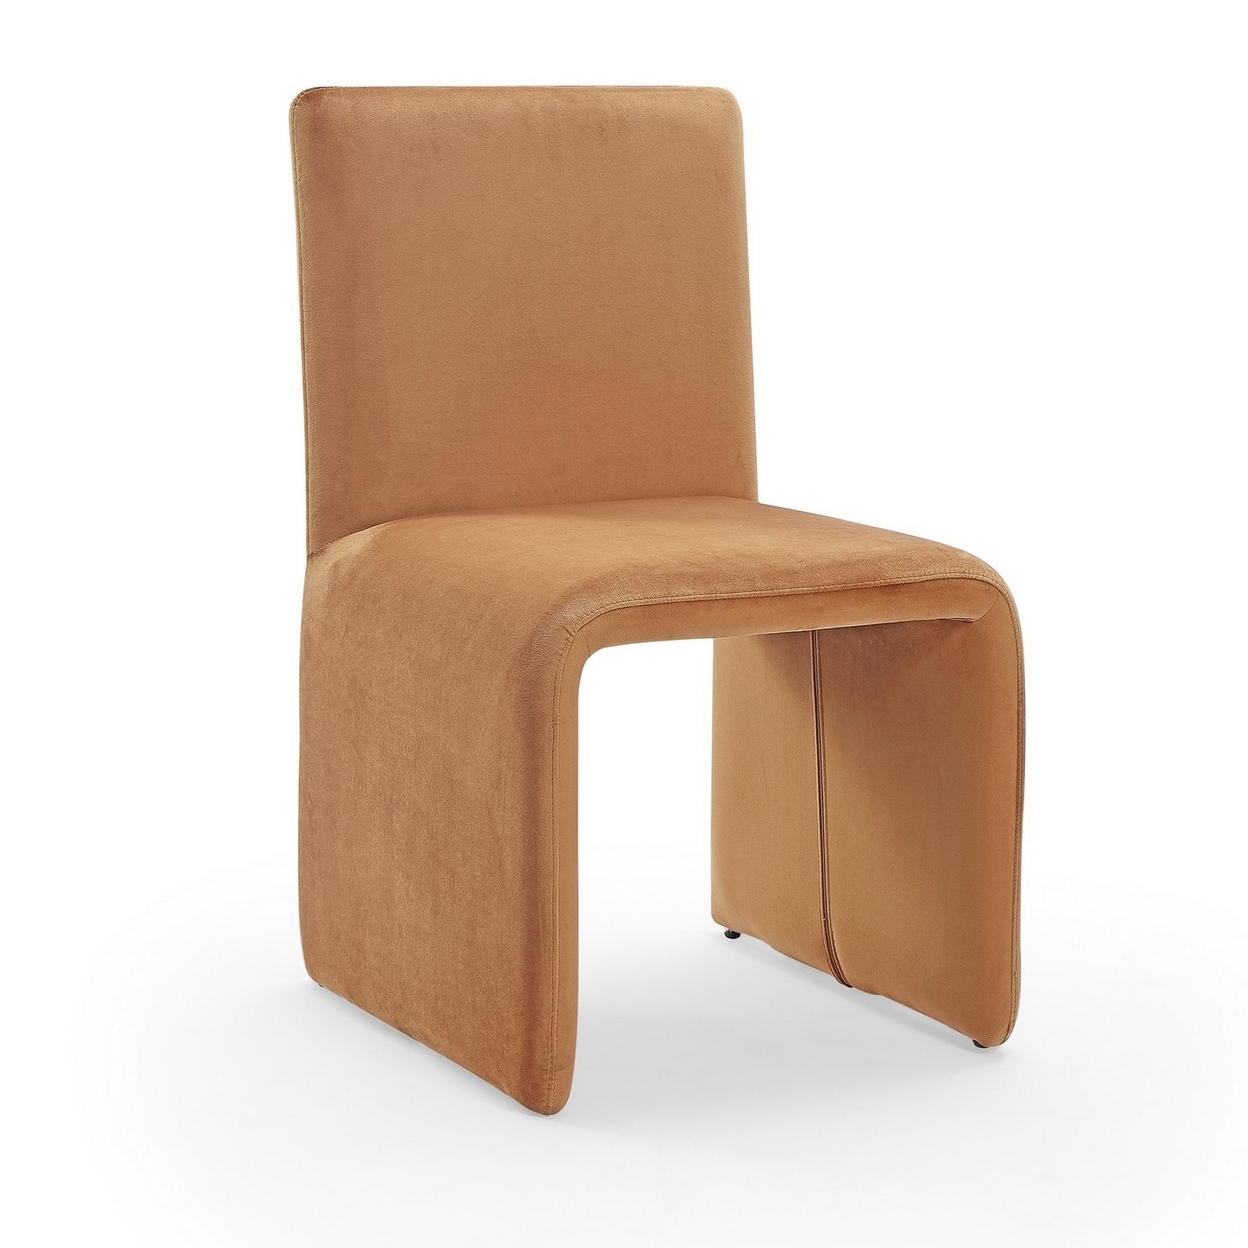 Winny 20 Inch Dining Chair, Waterfall Seat, Velvet Upholstery, Brown -Saltoro Sherpi